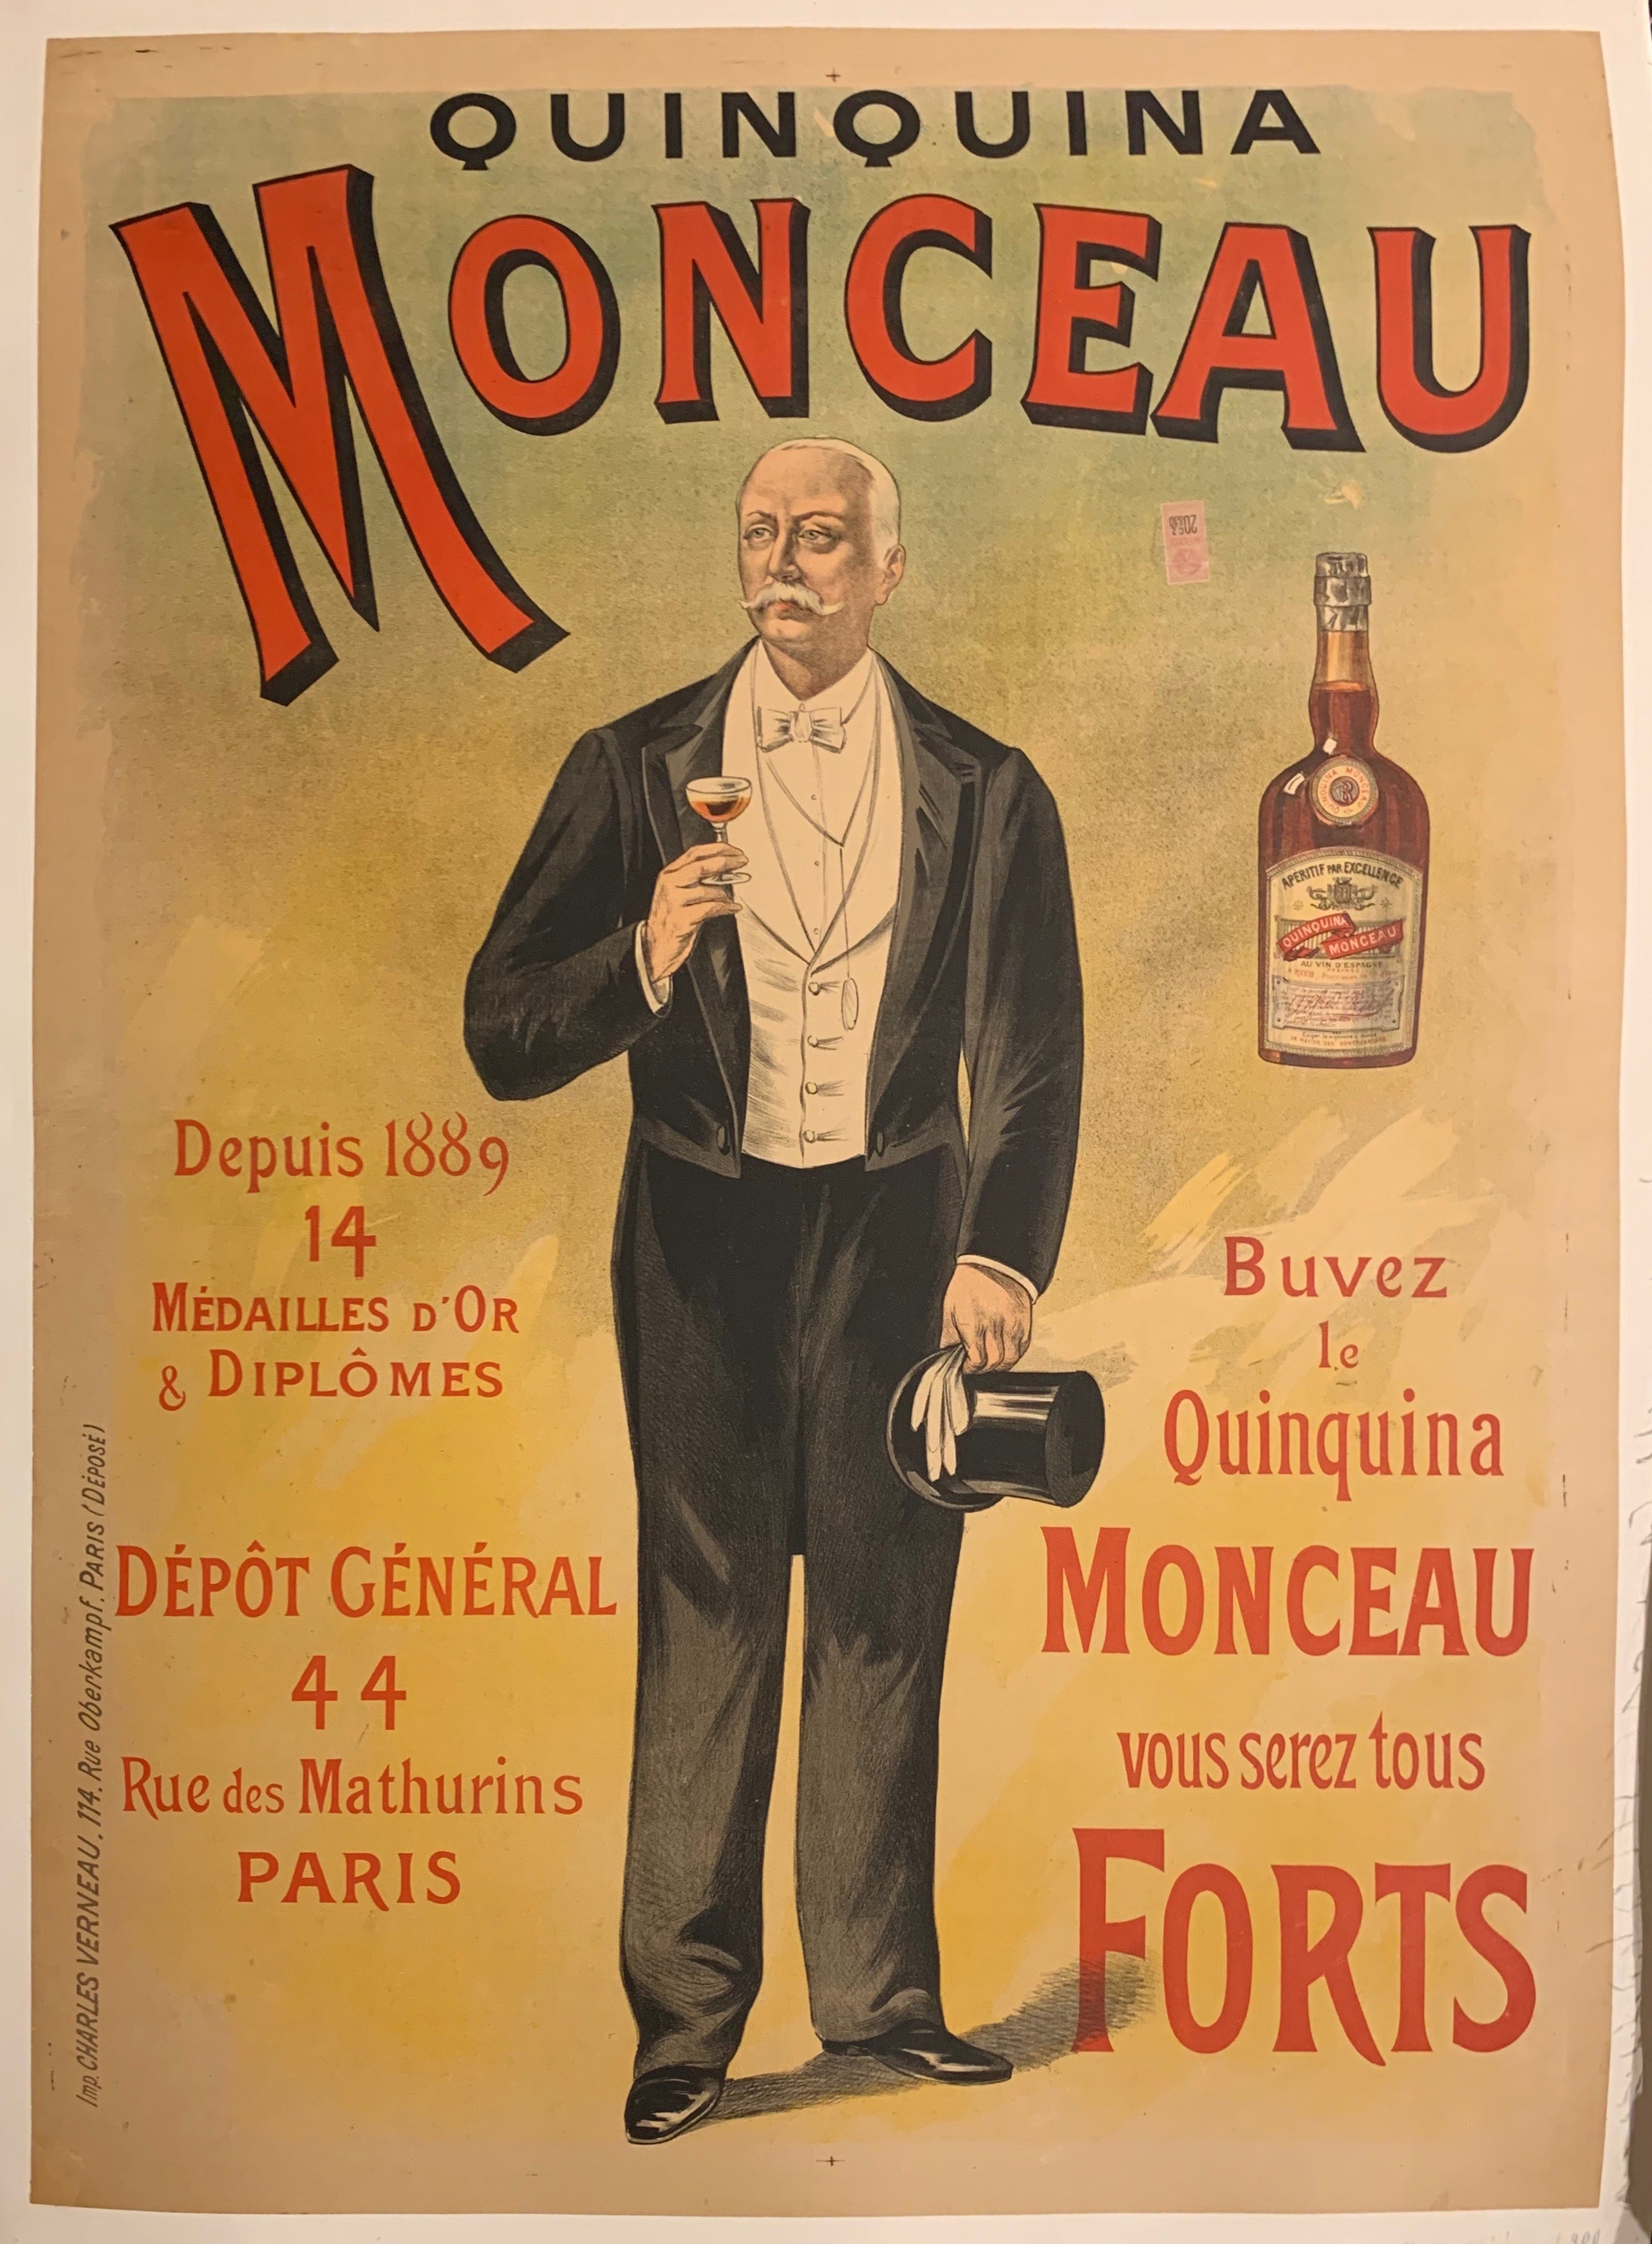 Quinquina Monceau Poster